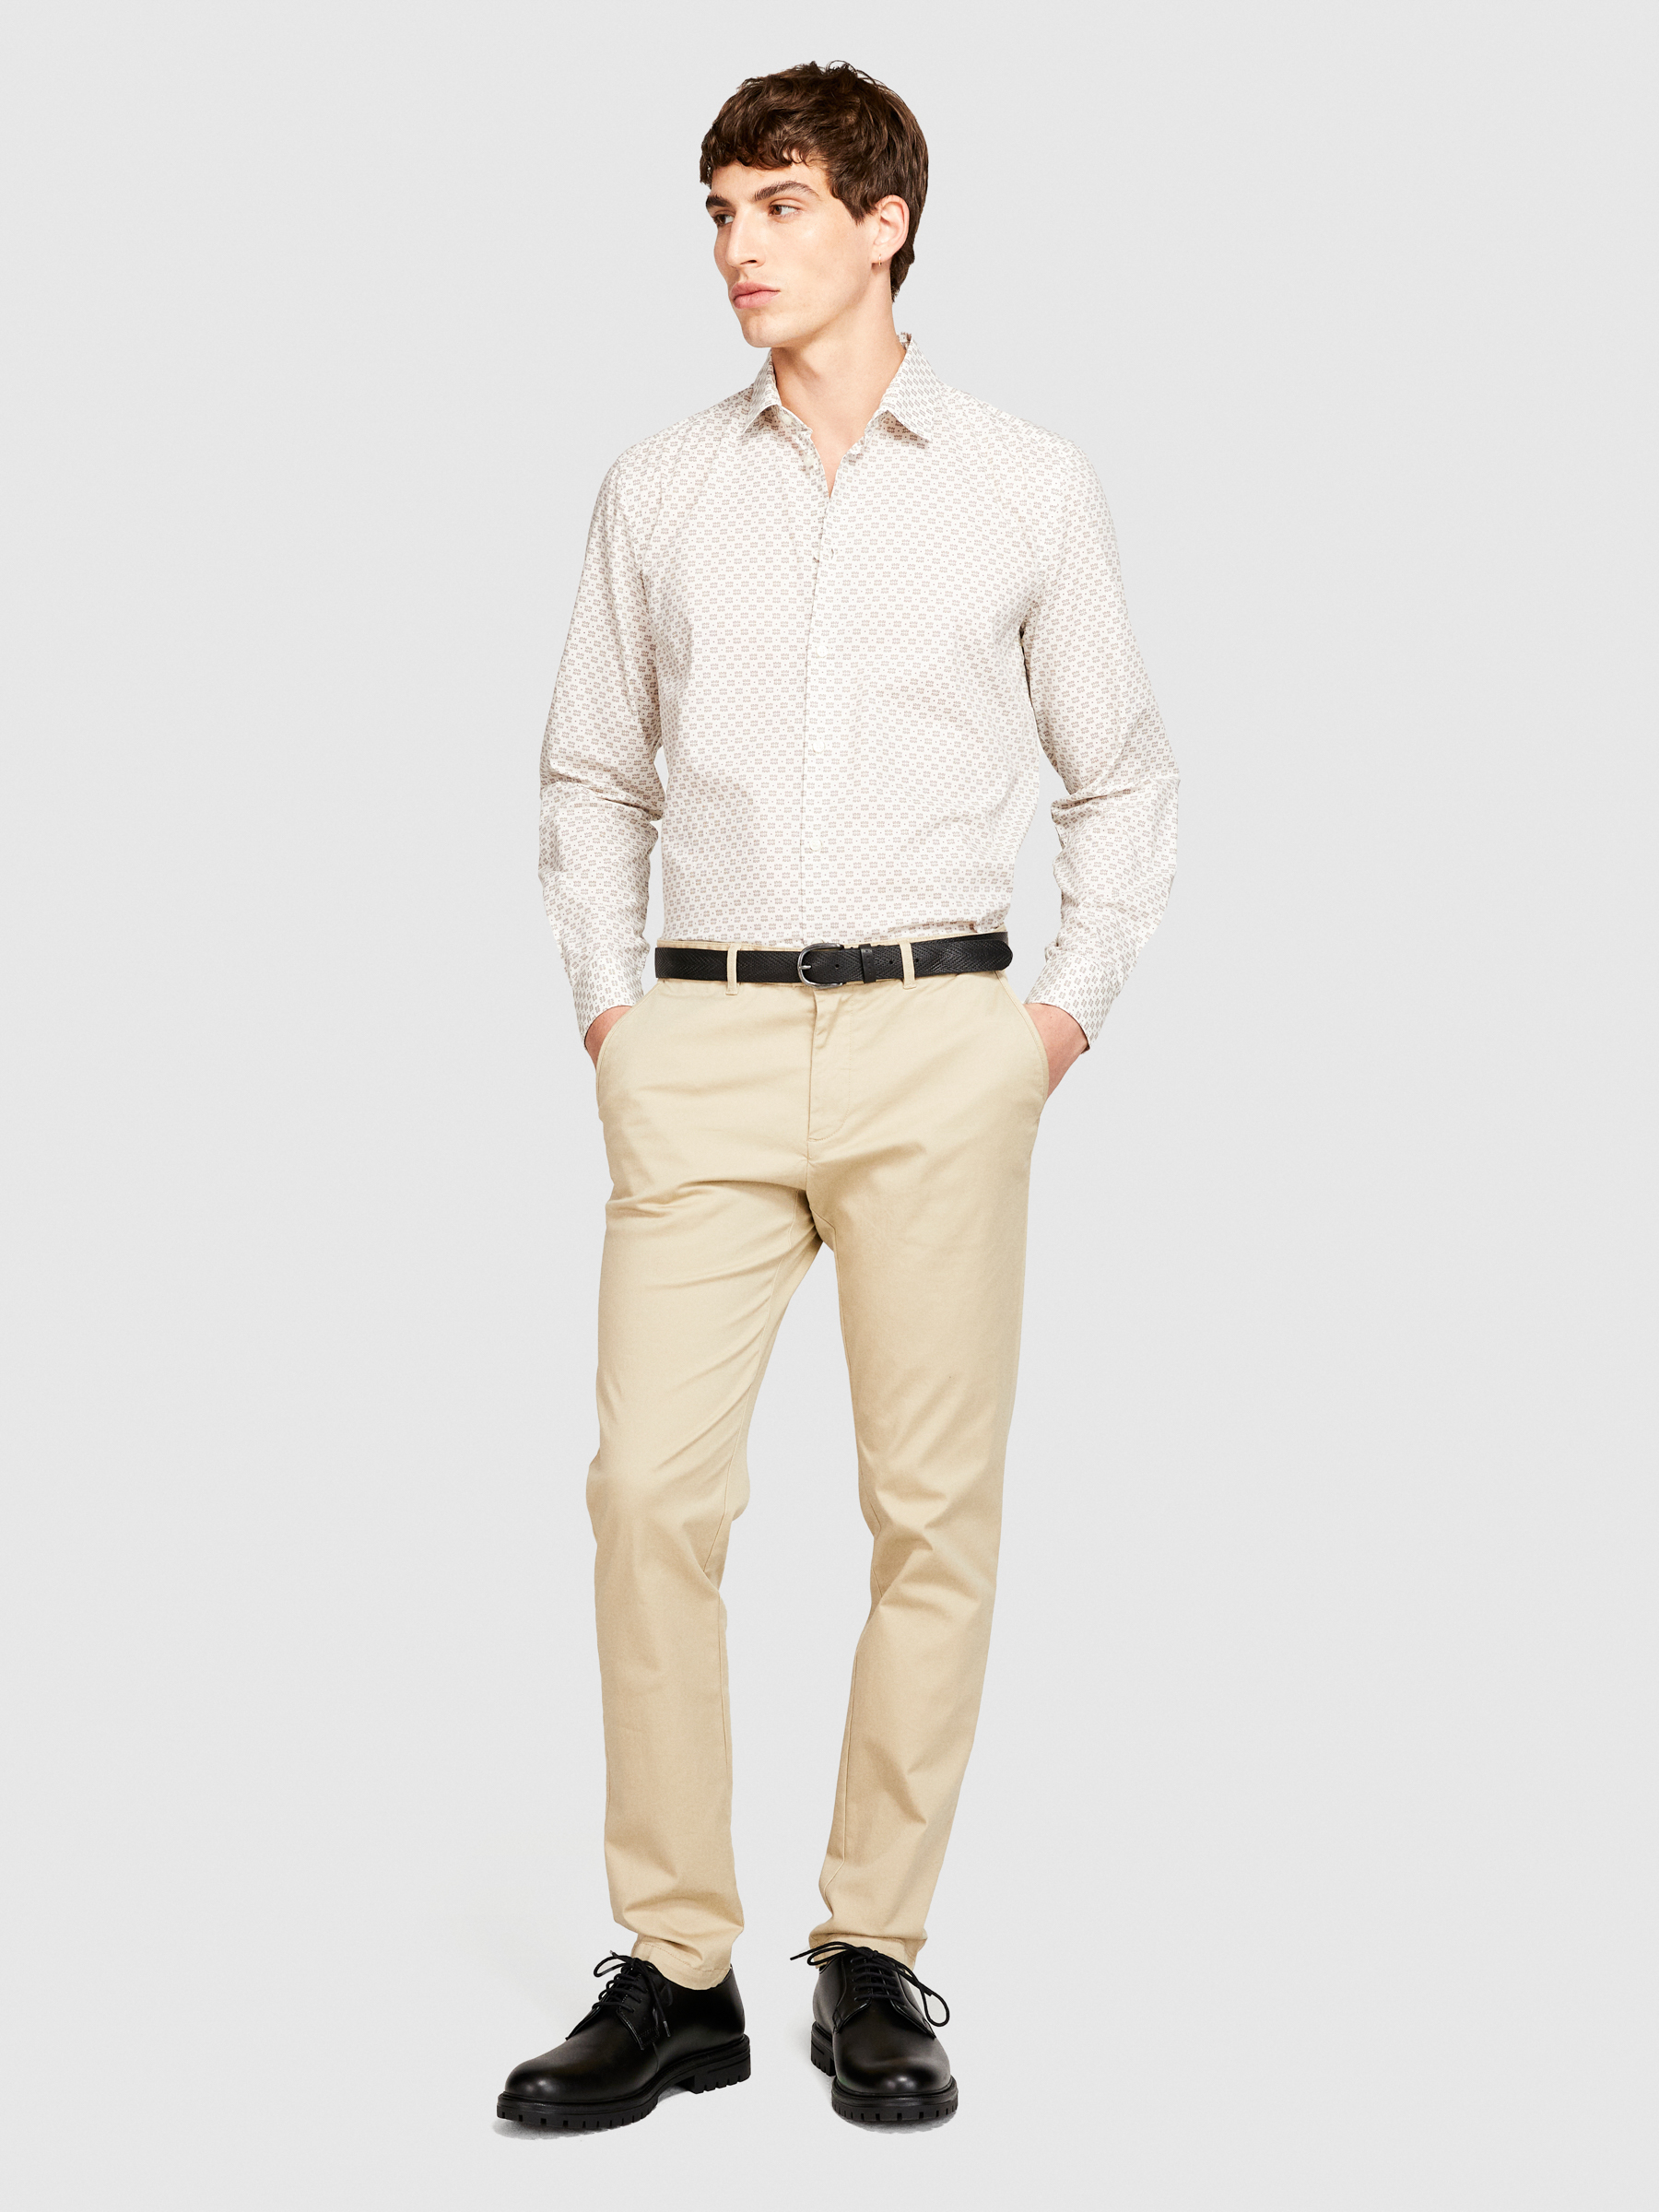 Sisley - Printed Shirt, Man, Beige, Size: XL